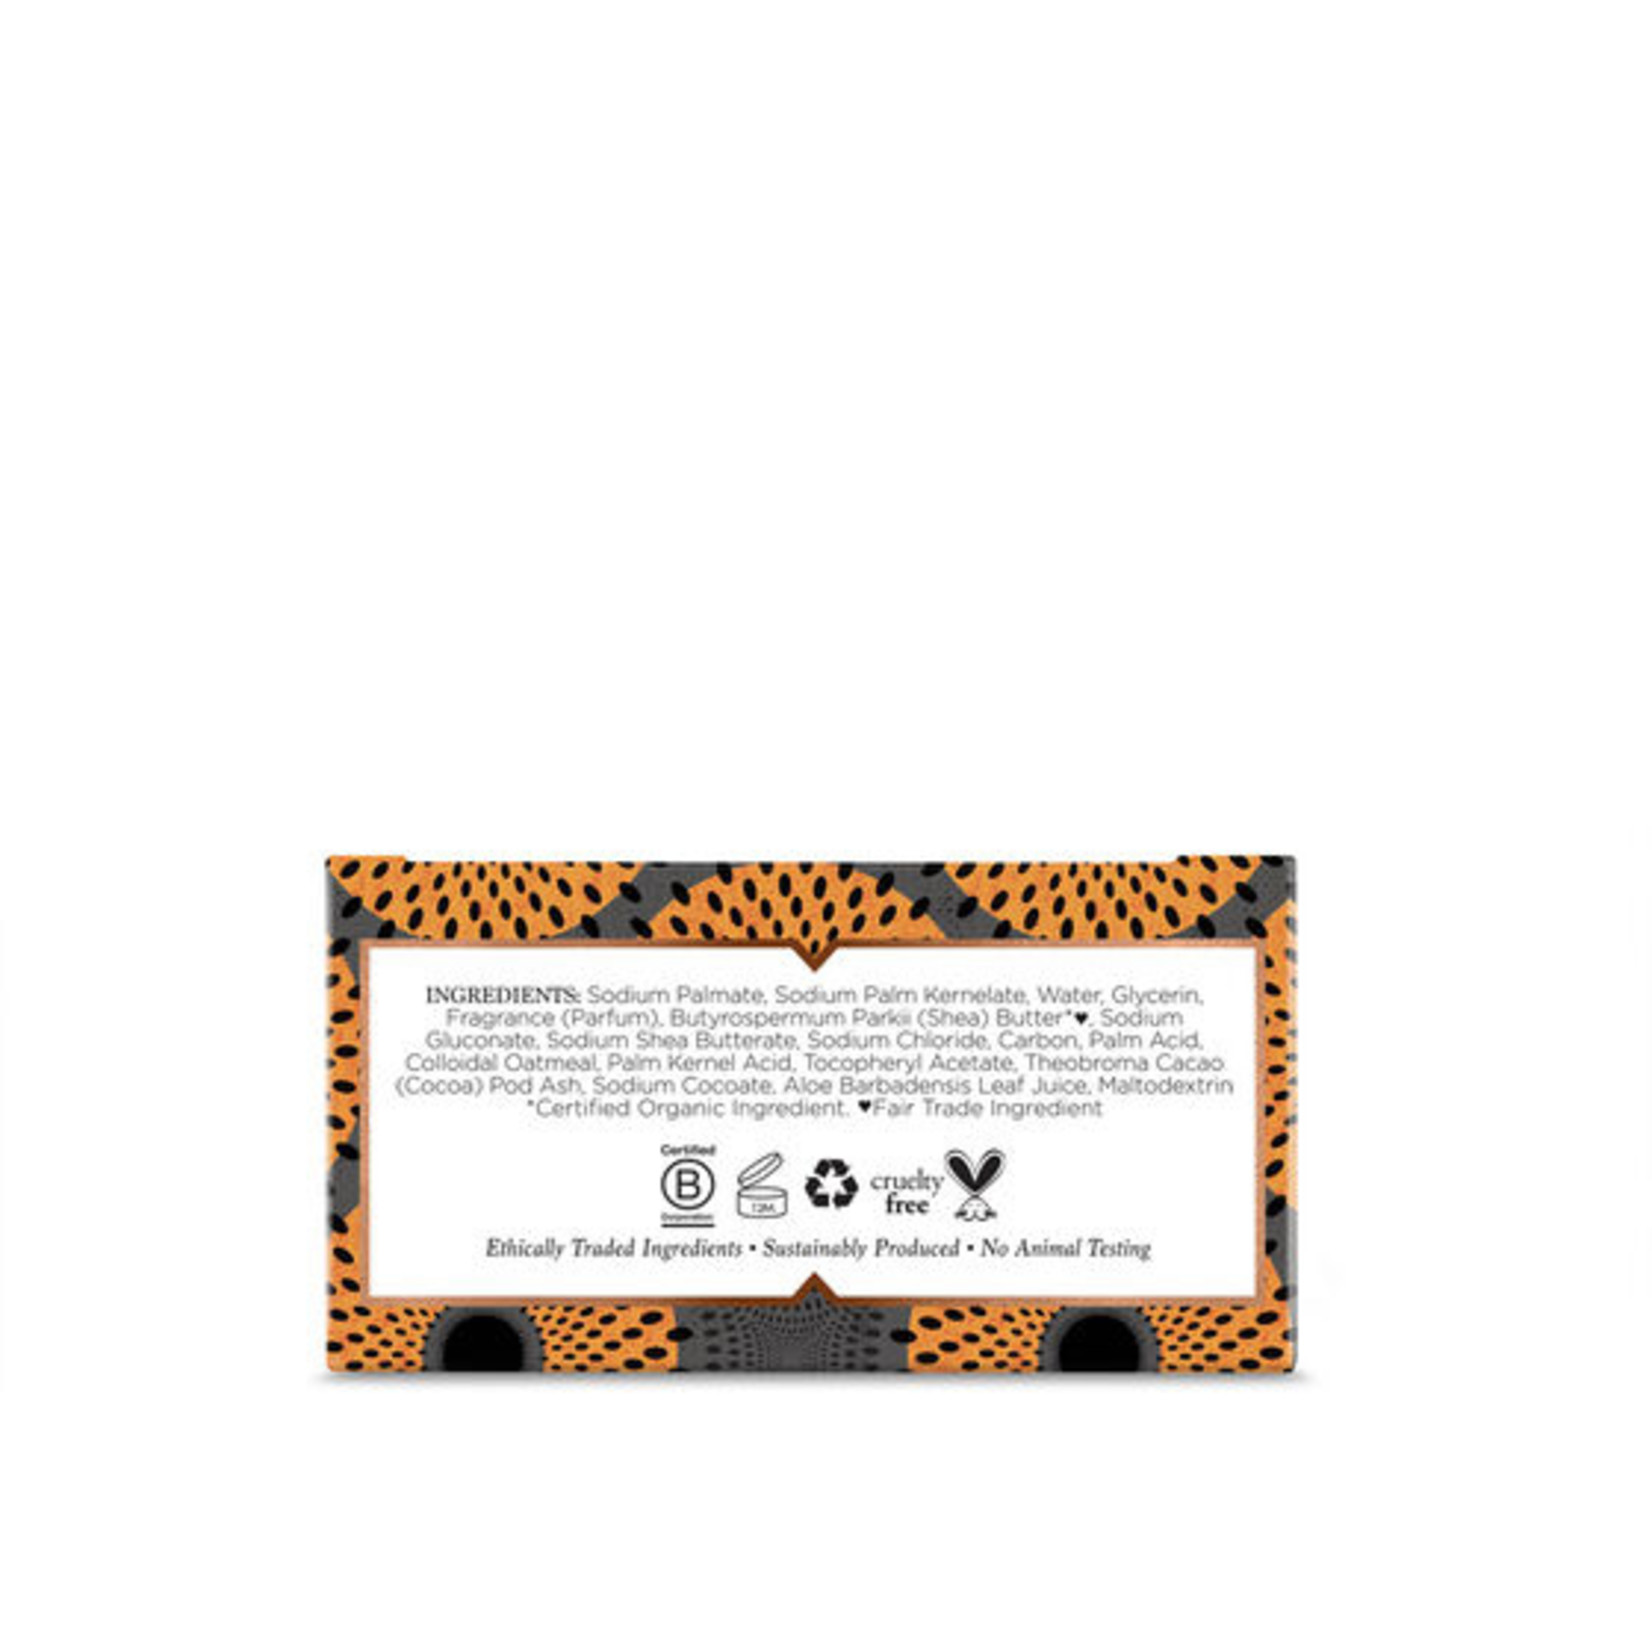 Nubian Heritage Nubian Heritage - Bar Soap African Black - 5 oz